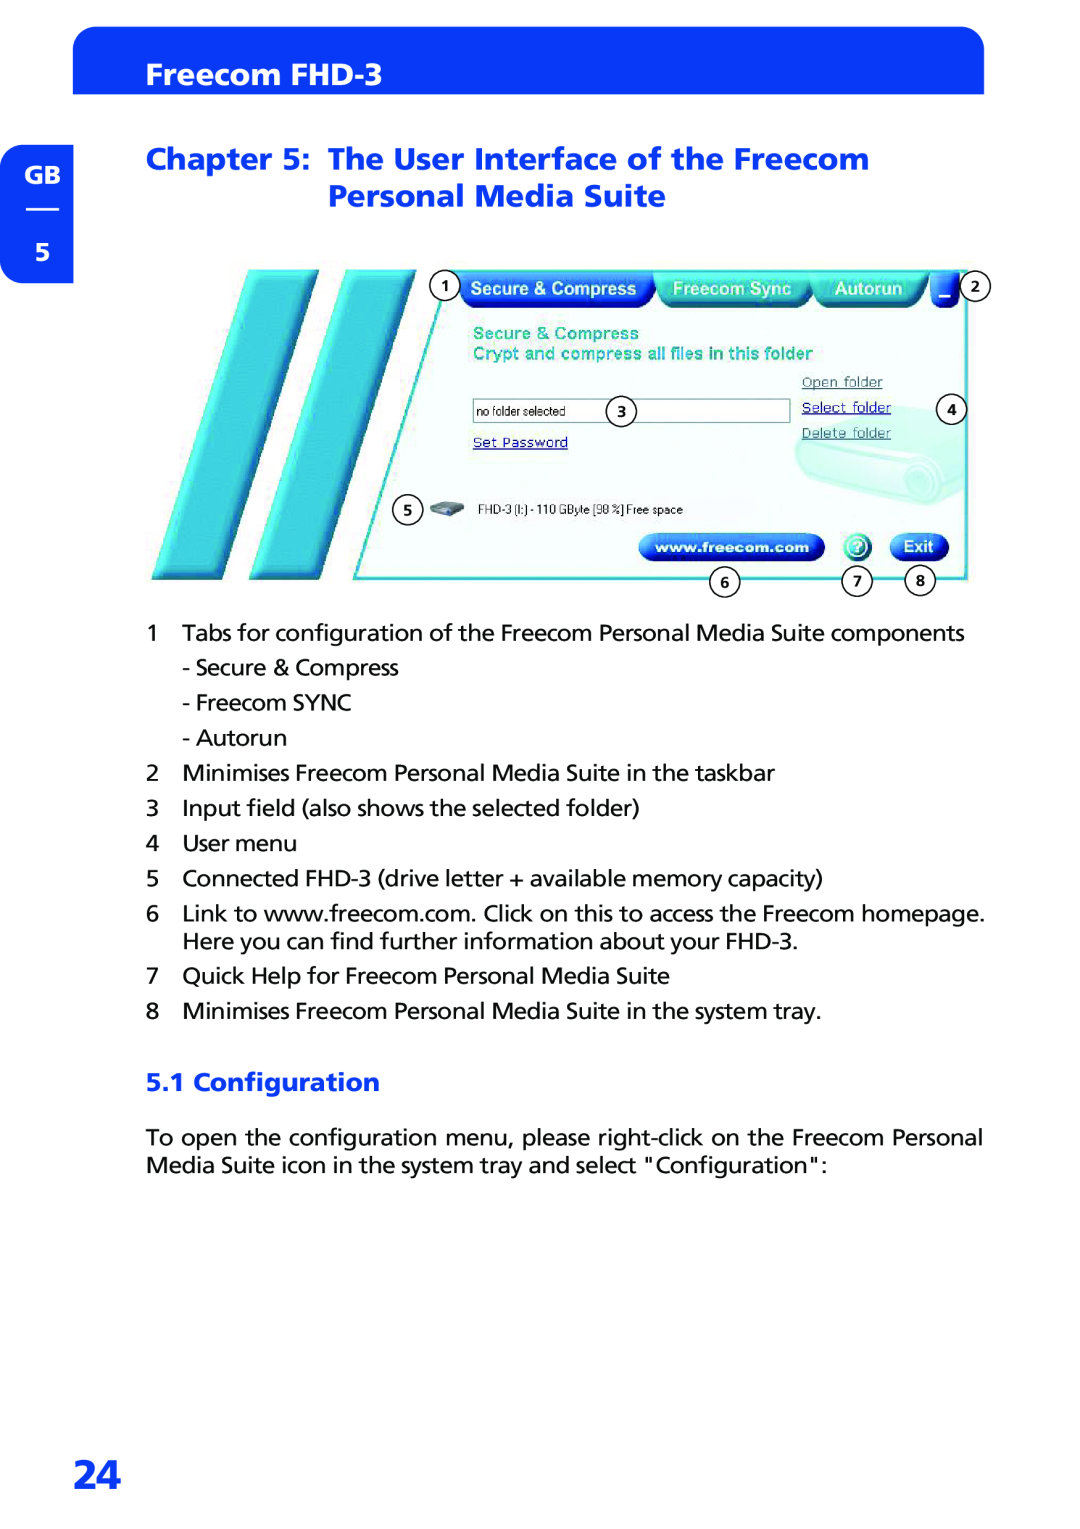 Freecom Technologies manual The User Interface of the Freecom Personal Media Suite, Configuration, Freecom FHD-3 